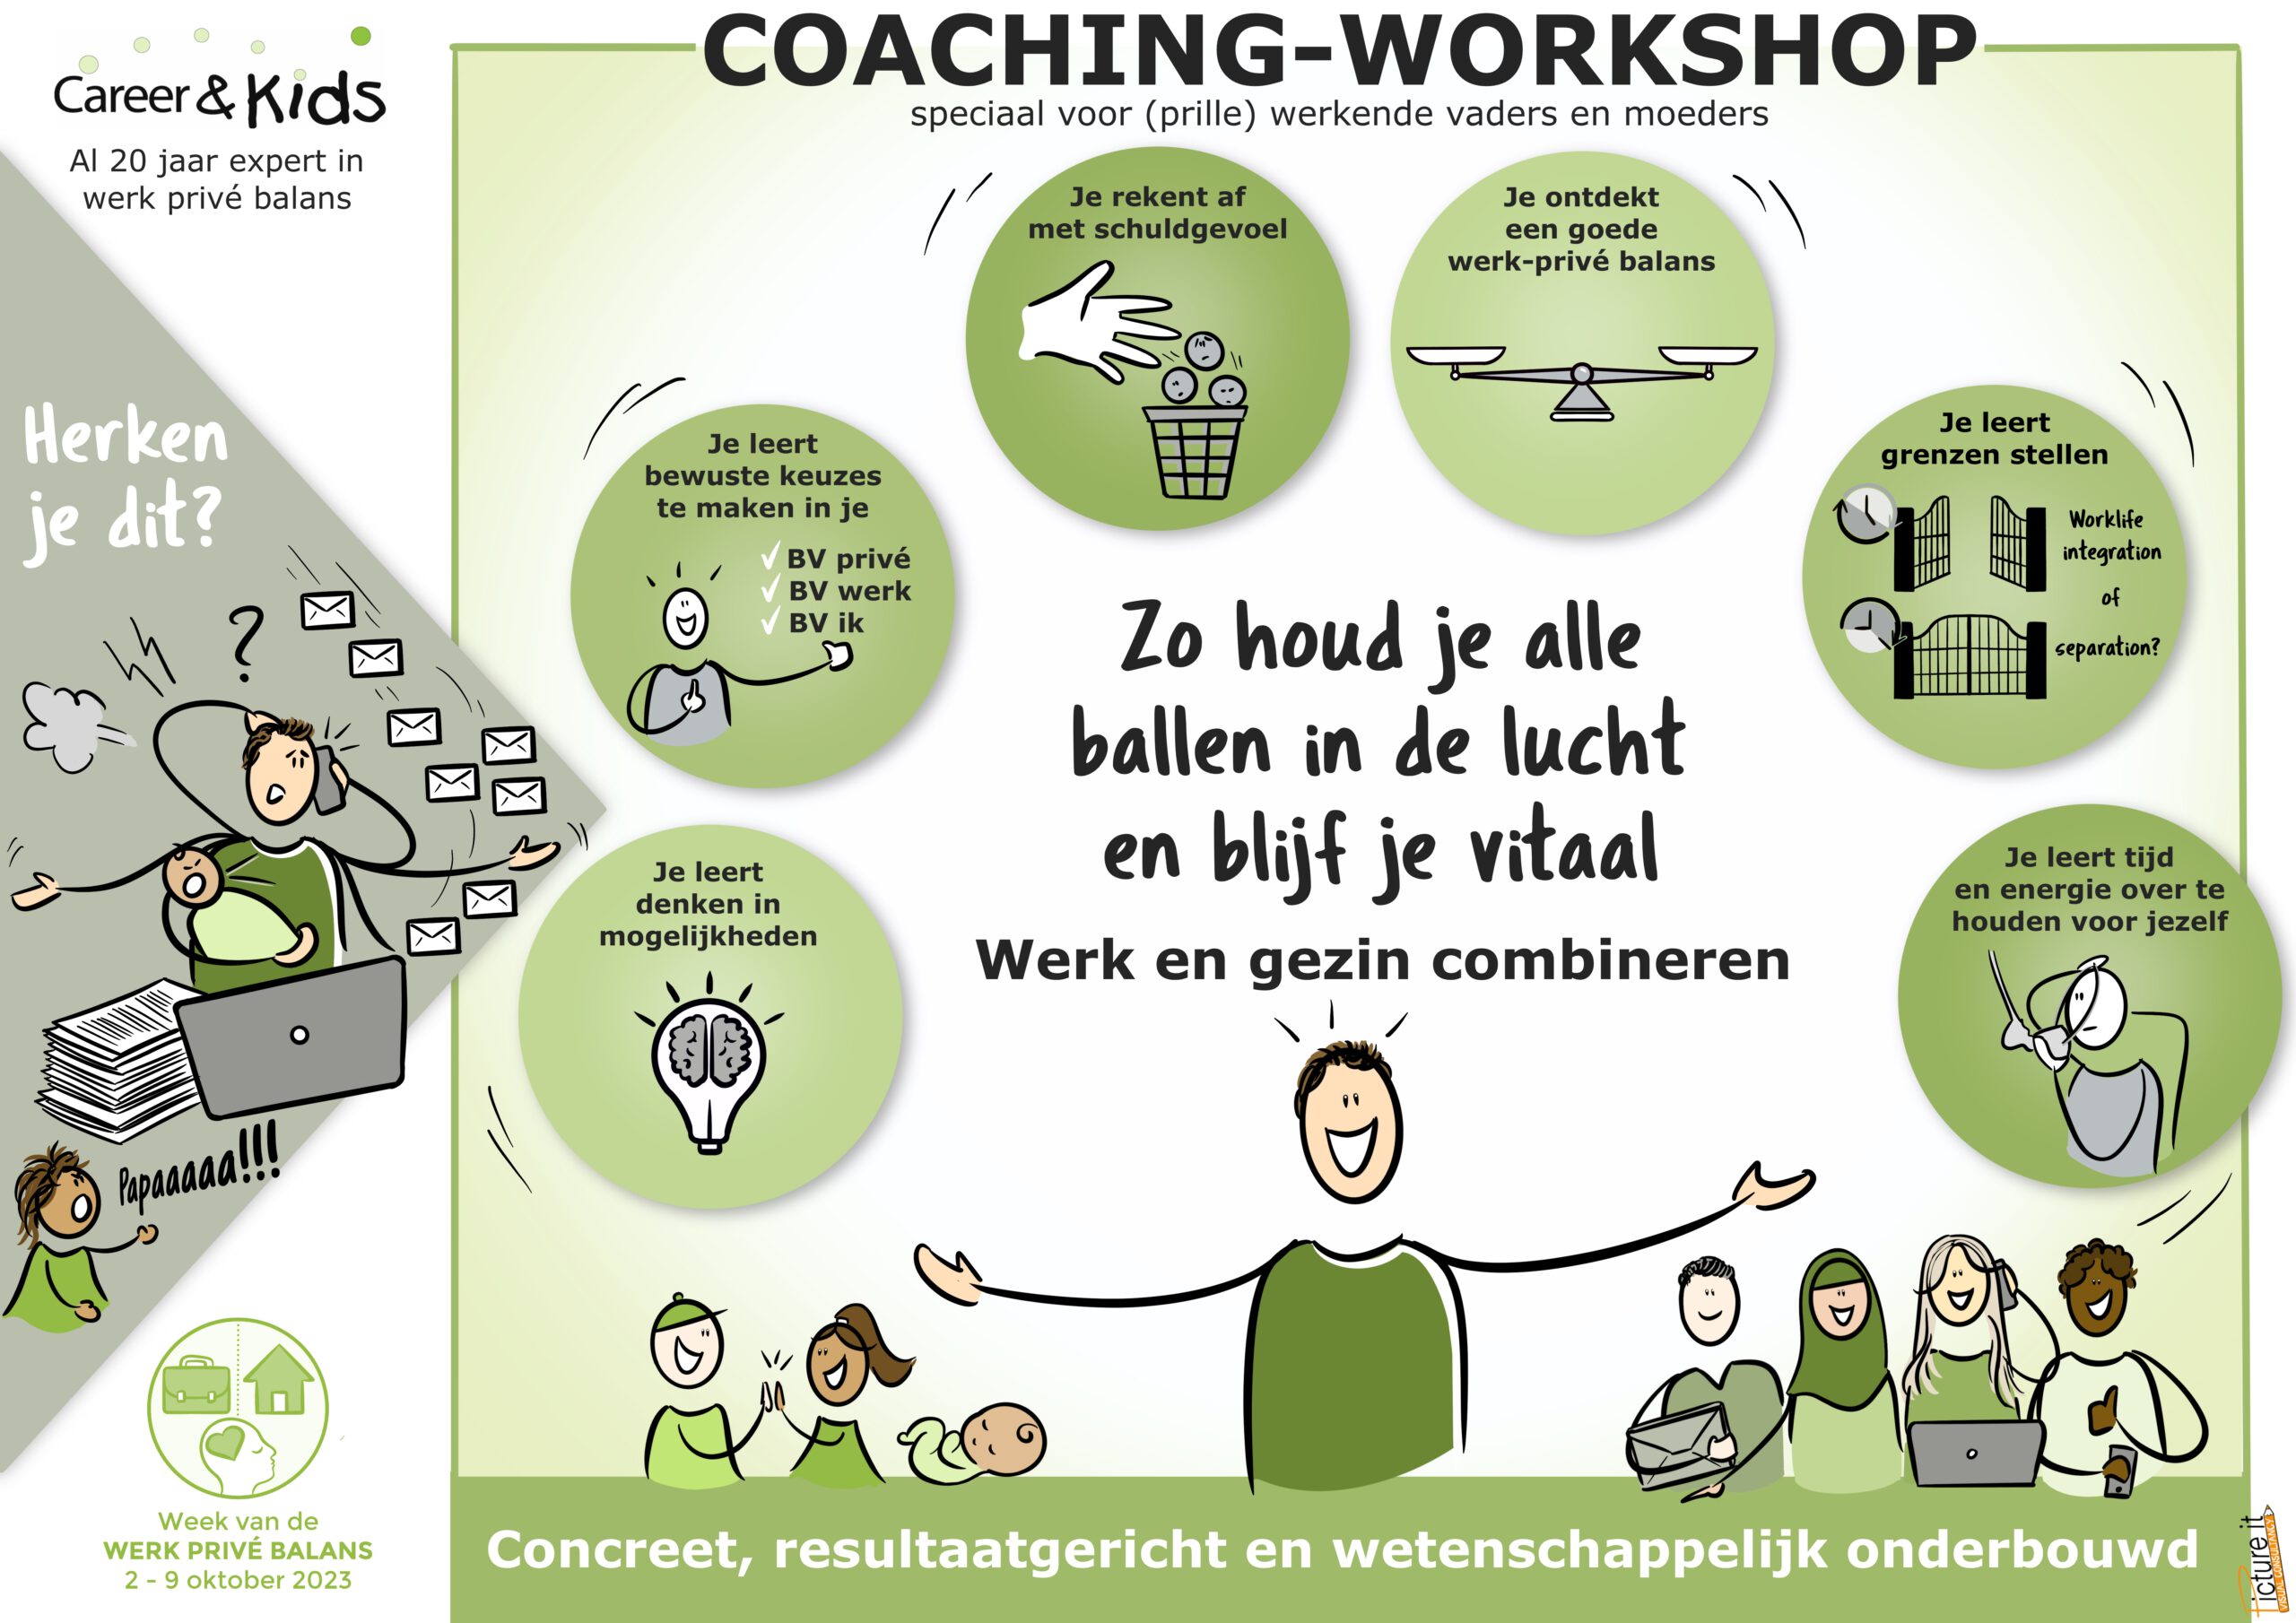 Coaching Workshop